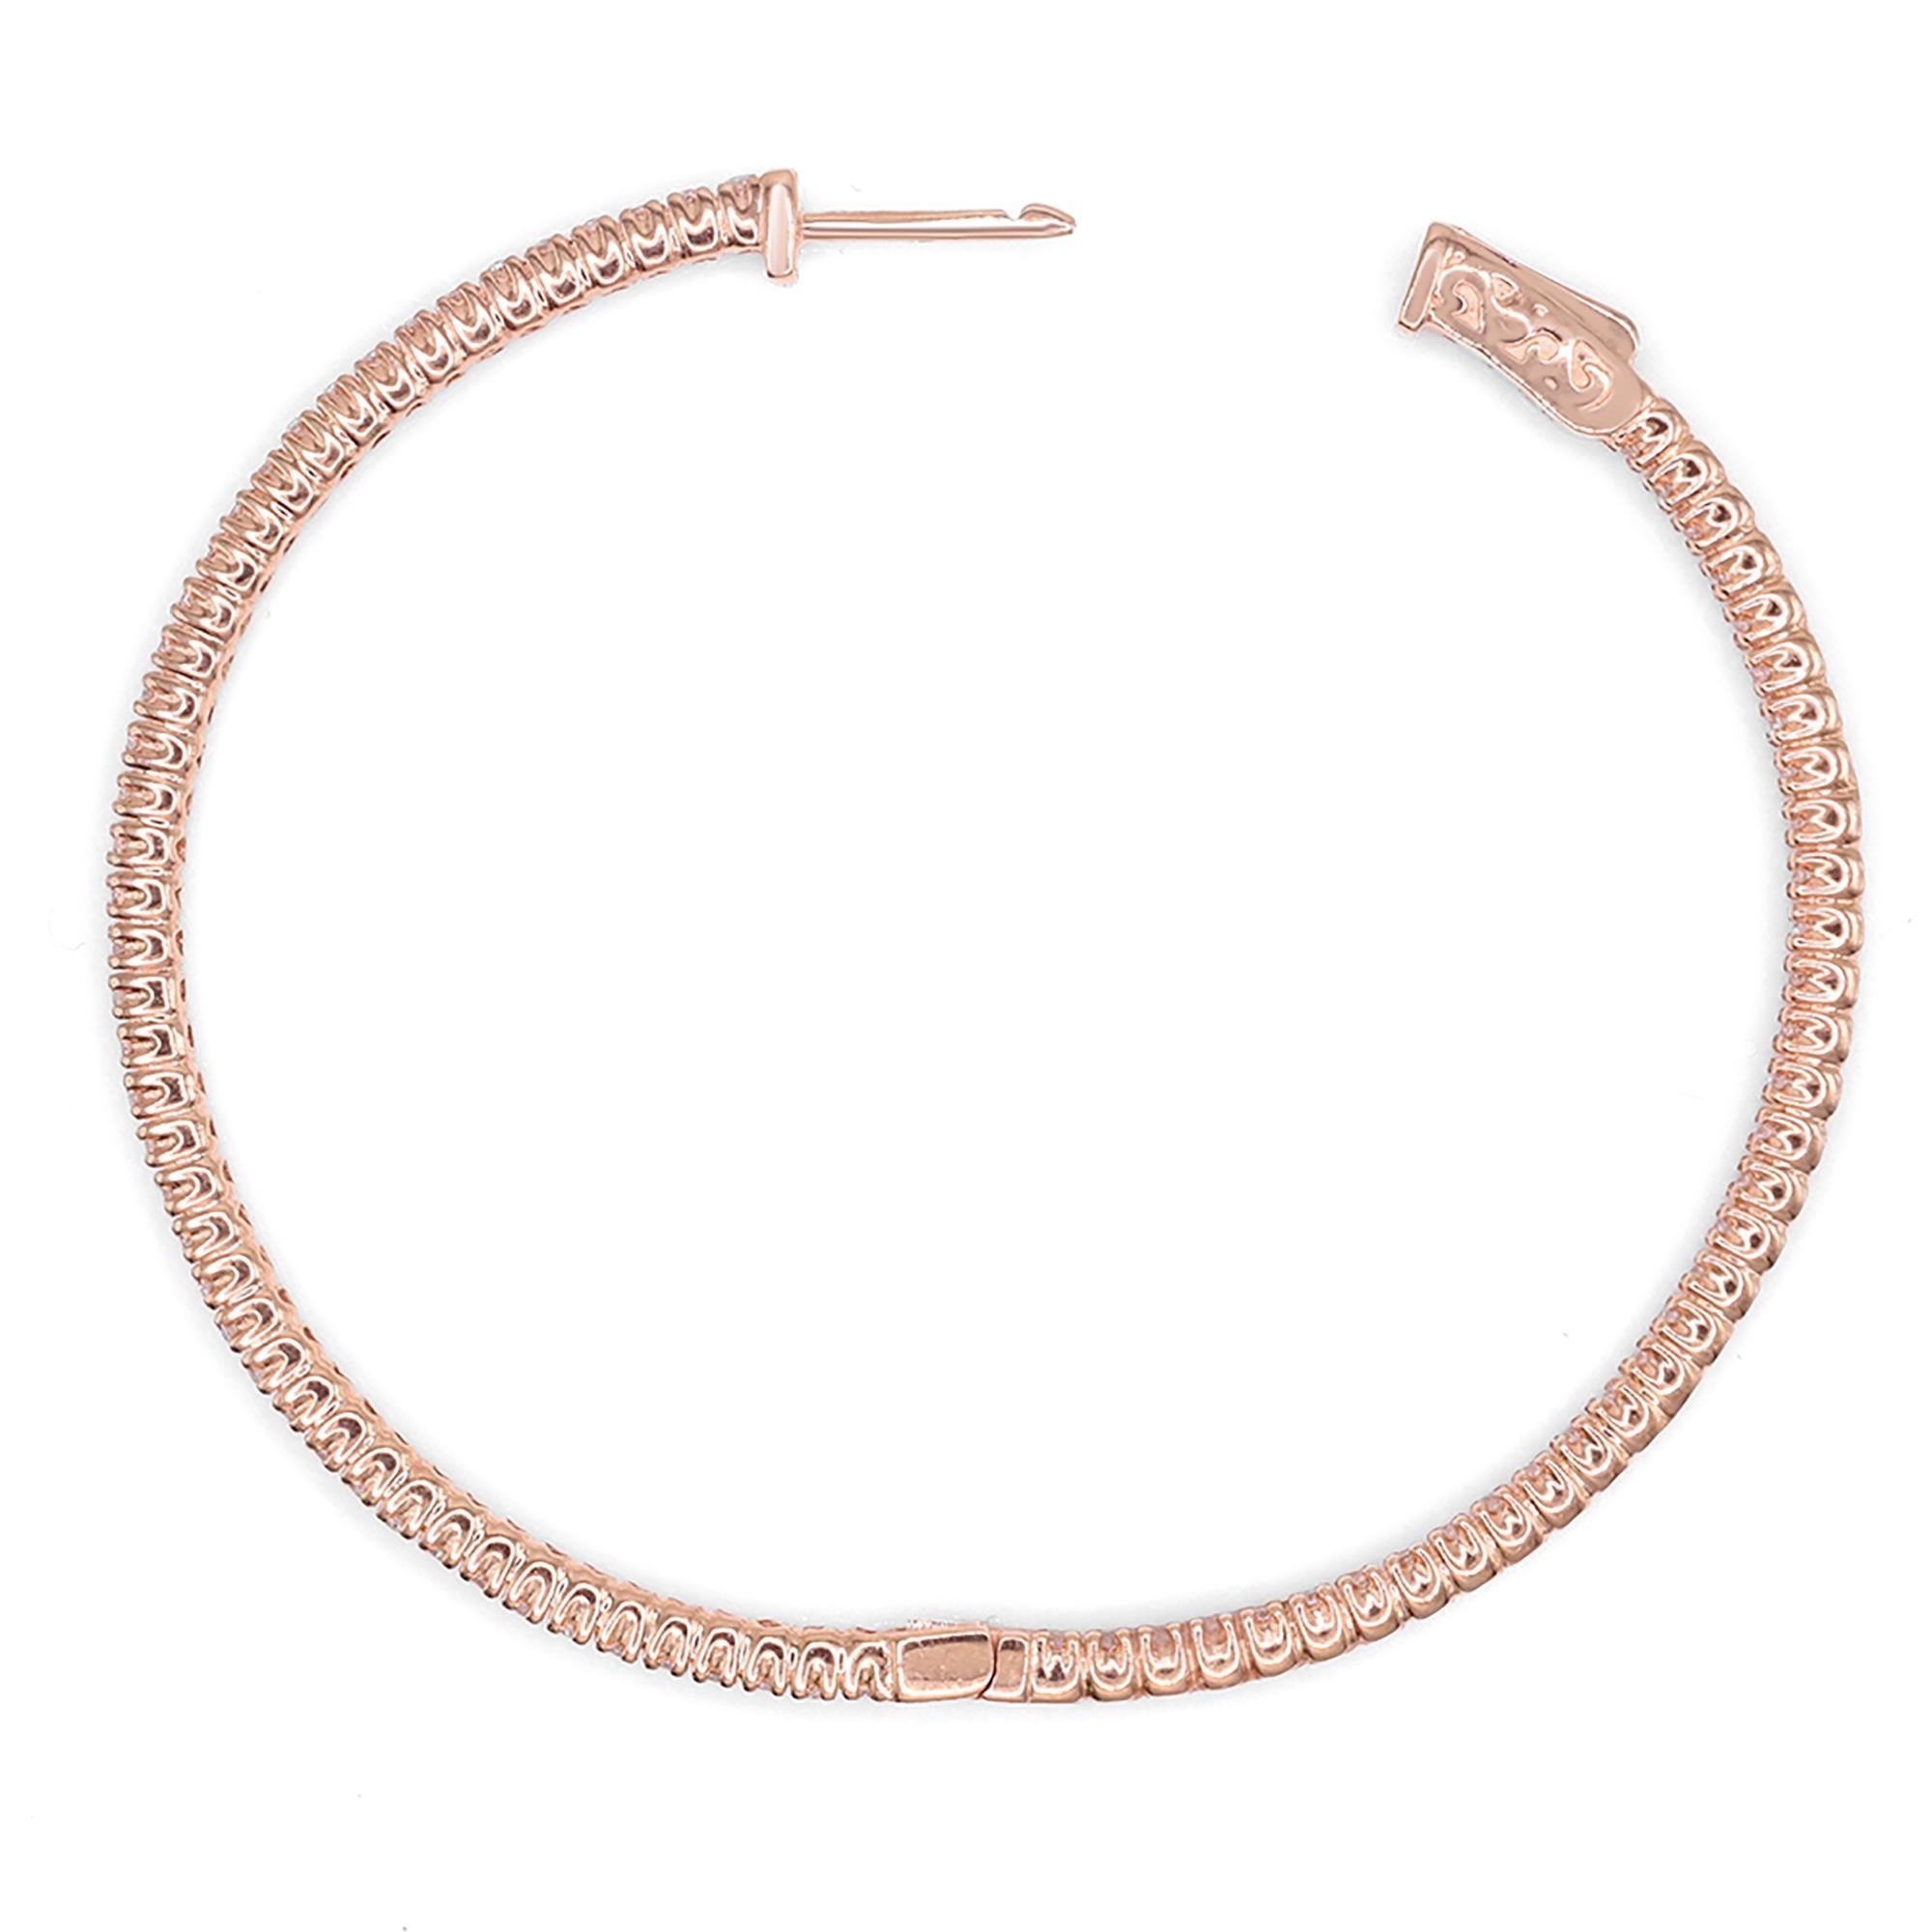 Rachel Koen Inside Out Diamond Hoop Earrings 14K Rose Gold 1.65cttw In New Condition For Sale In New York, NY